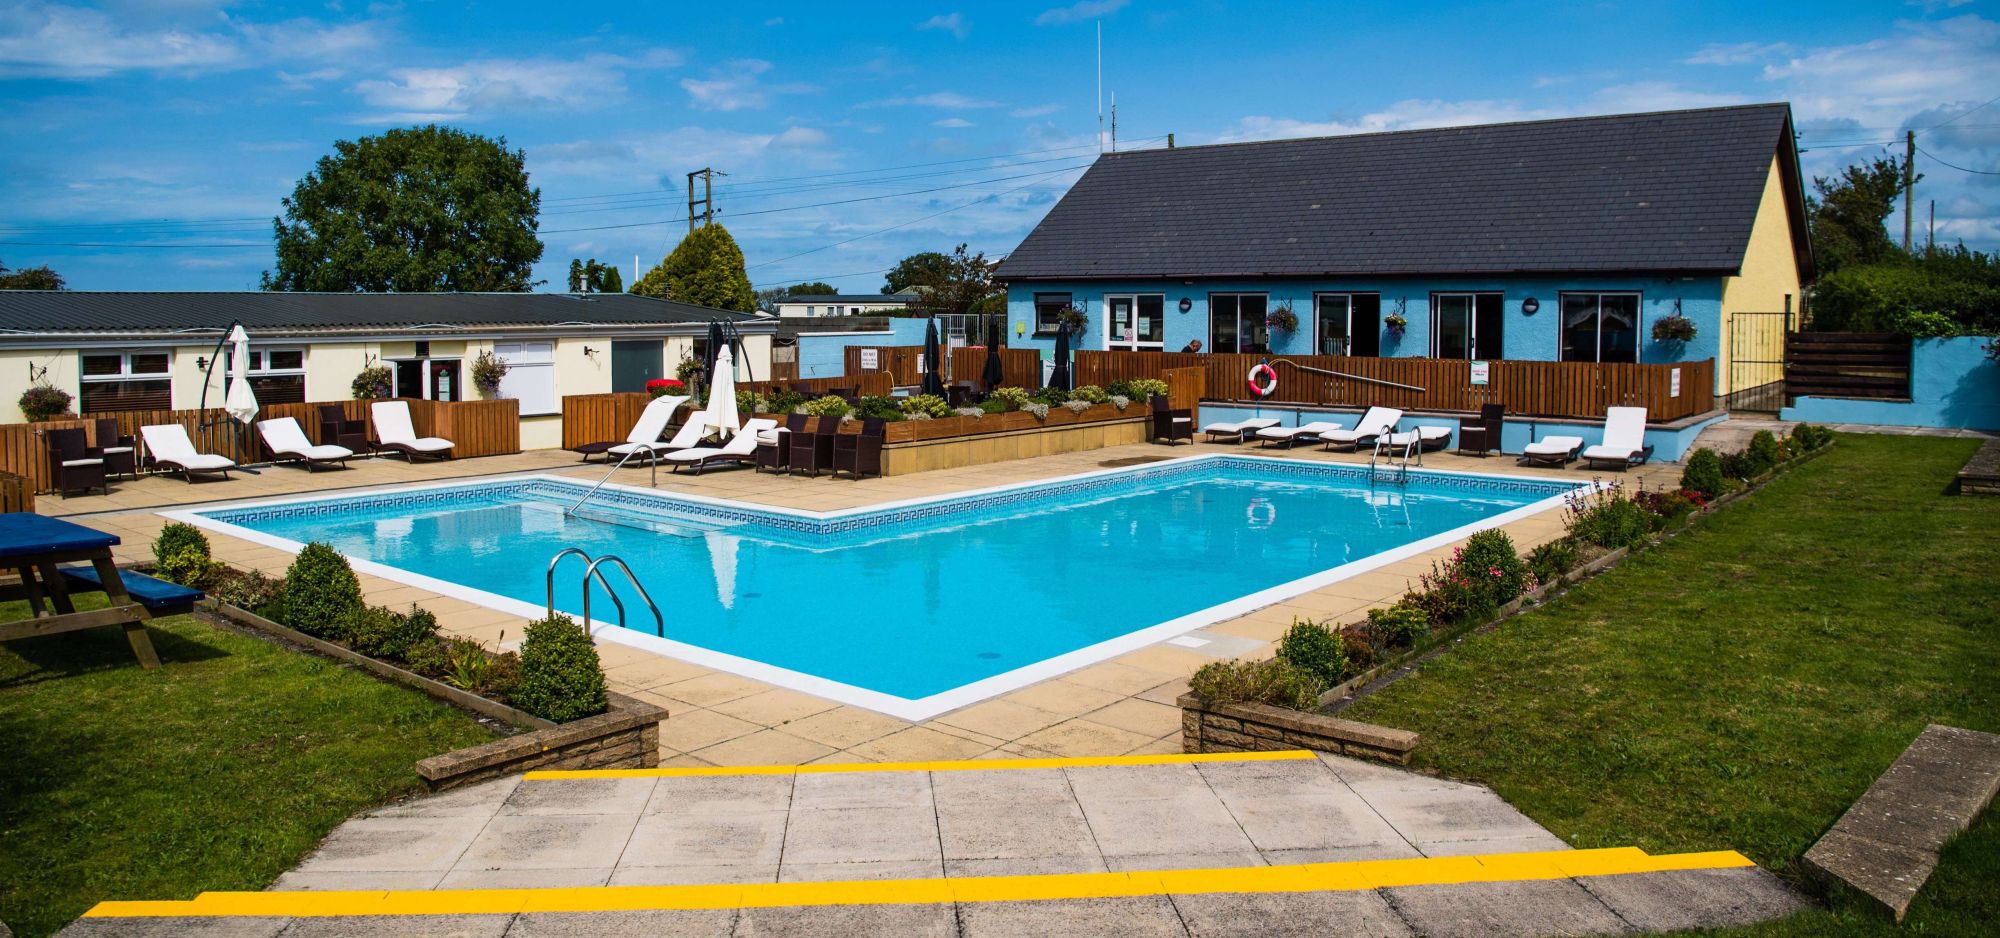 Ocean Heights outdoor swimming pool in Wales